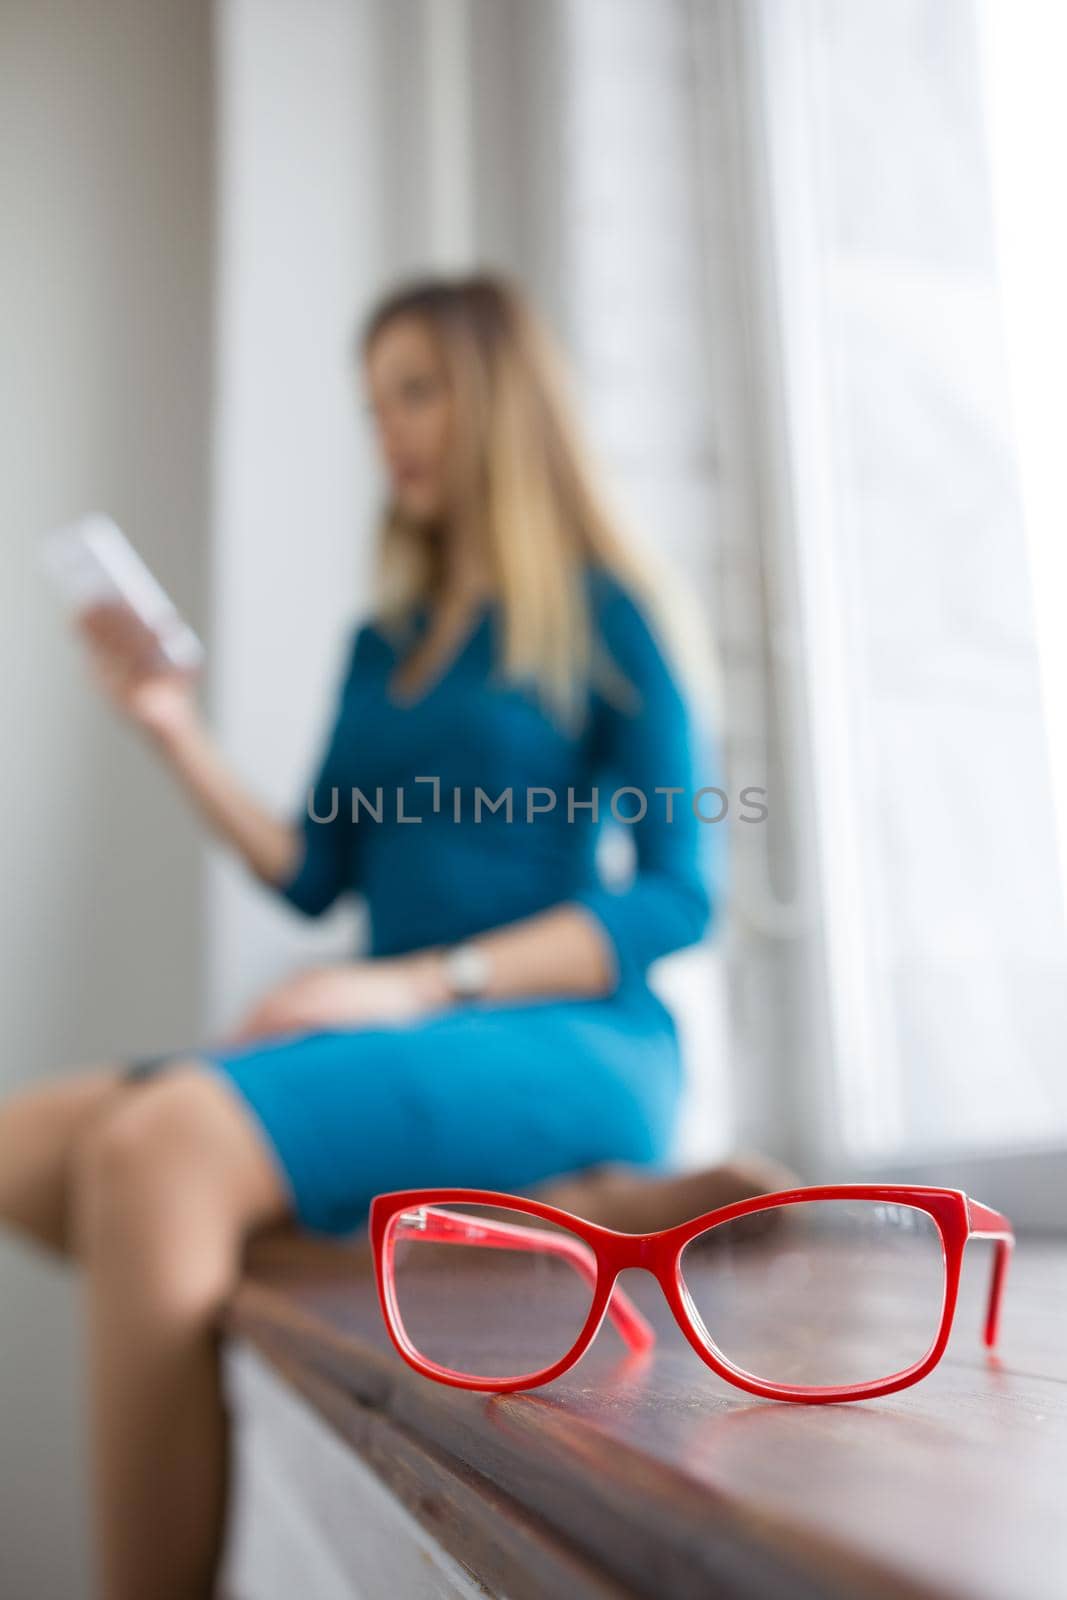 Attractive blonde business woman holds smartphone near window, de-focused, telephoto